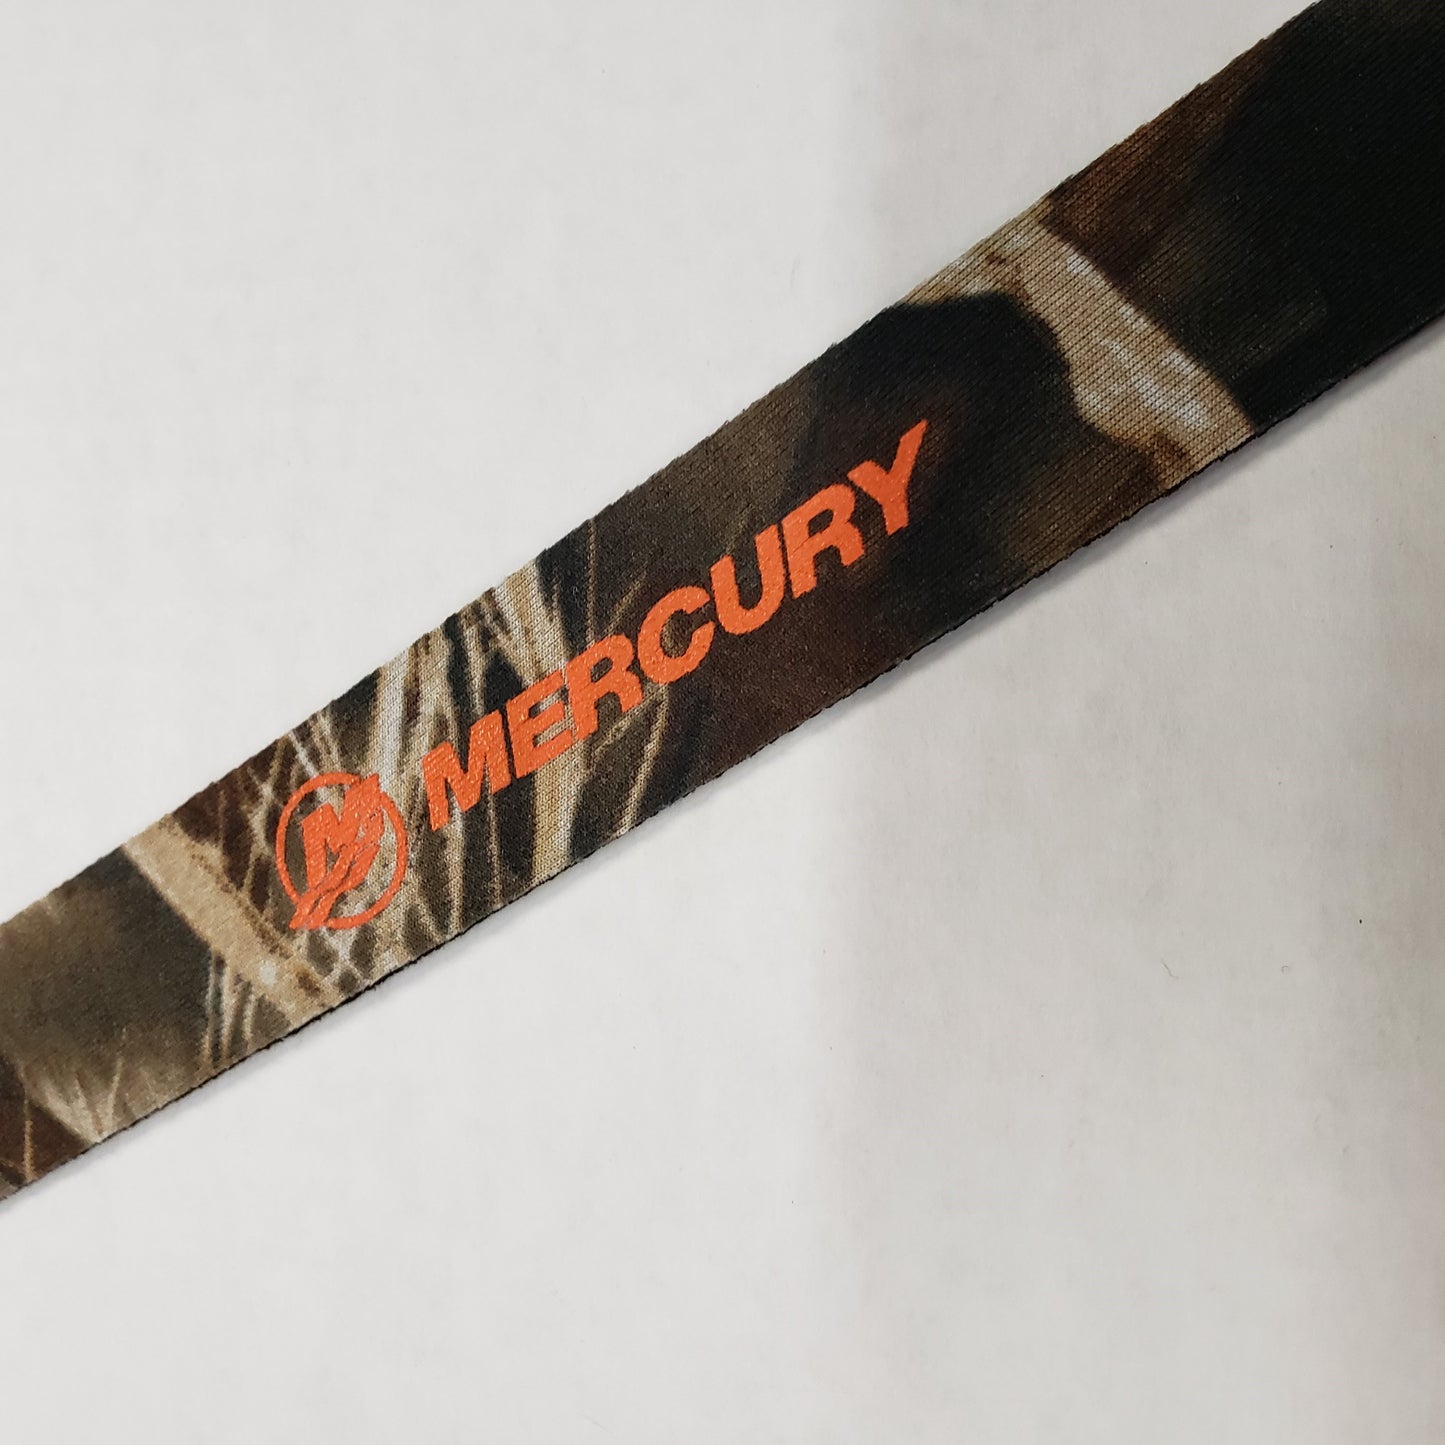 New Authentic Mercury Marine Sunglasses Strap Camo/Orange Logo